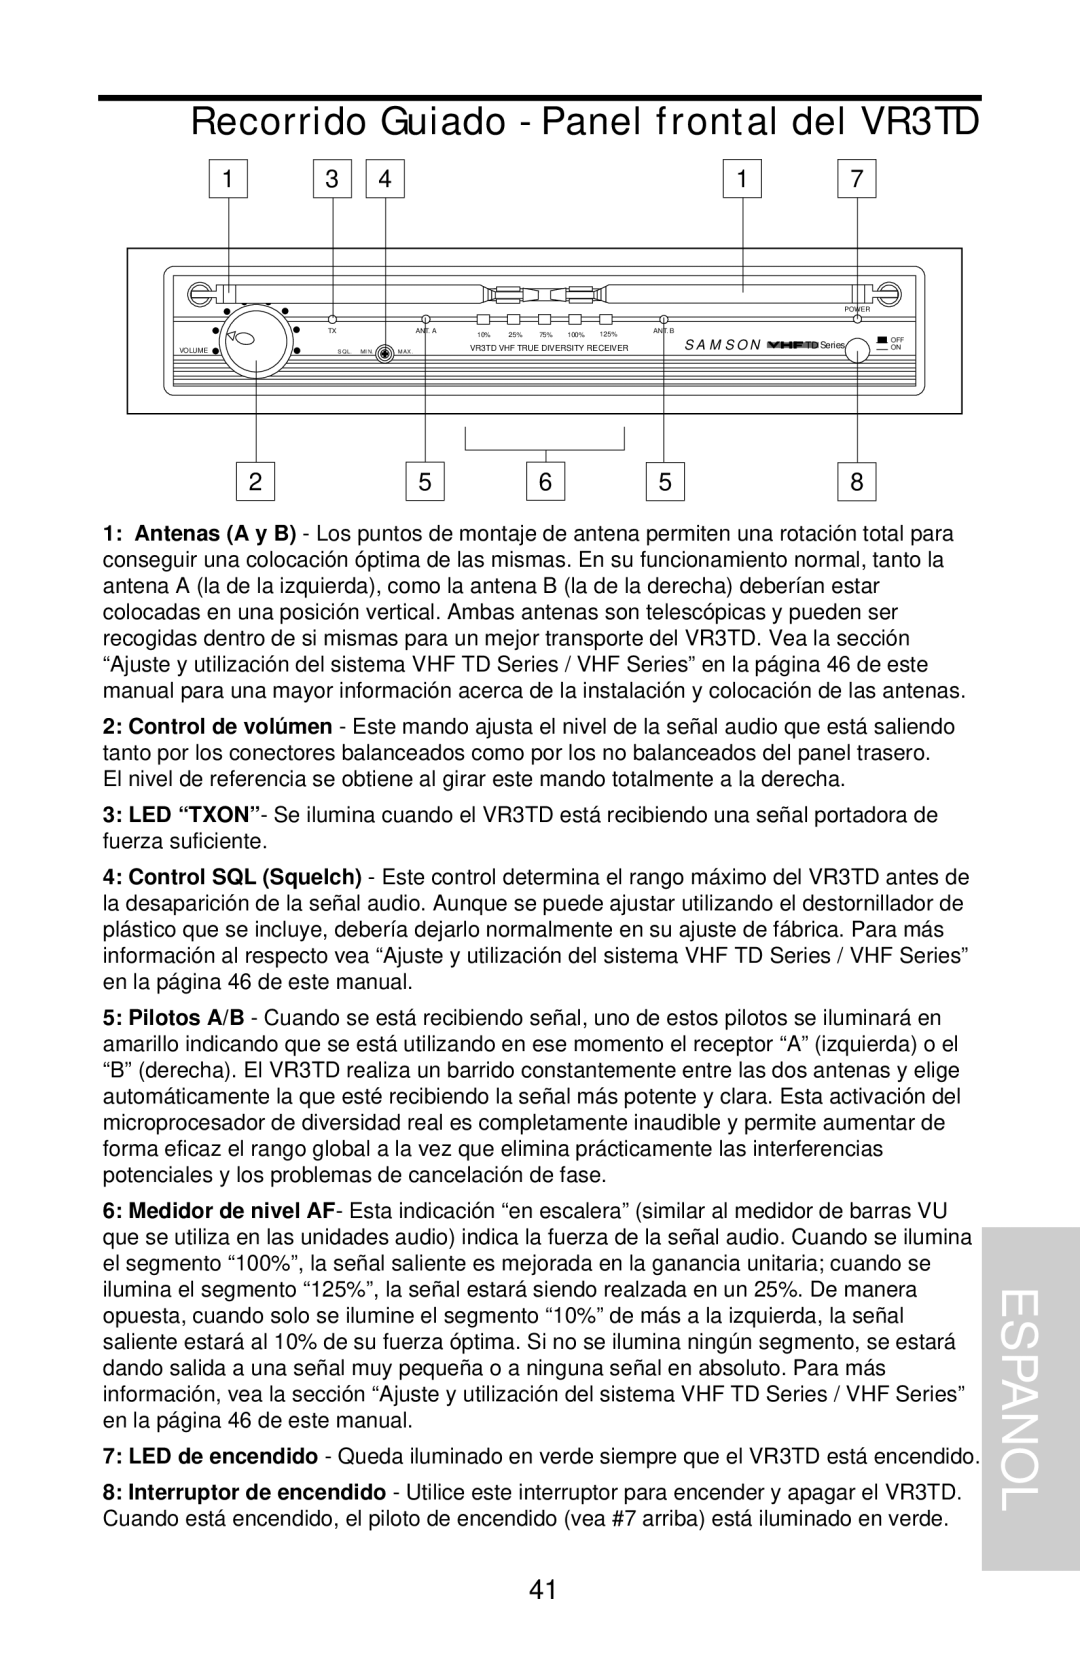 Samson VHF Series, VHF TD Series owner manual Recorrido Guiado - Panel frontal del VR3TD, Espanol 